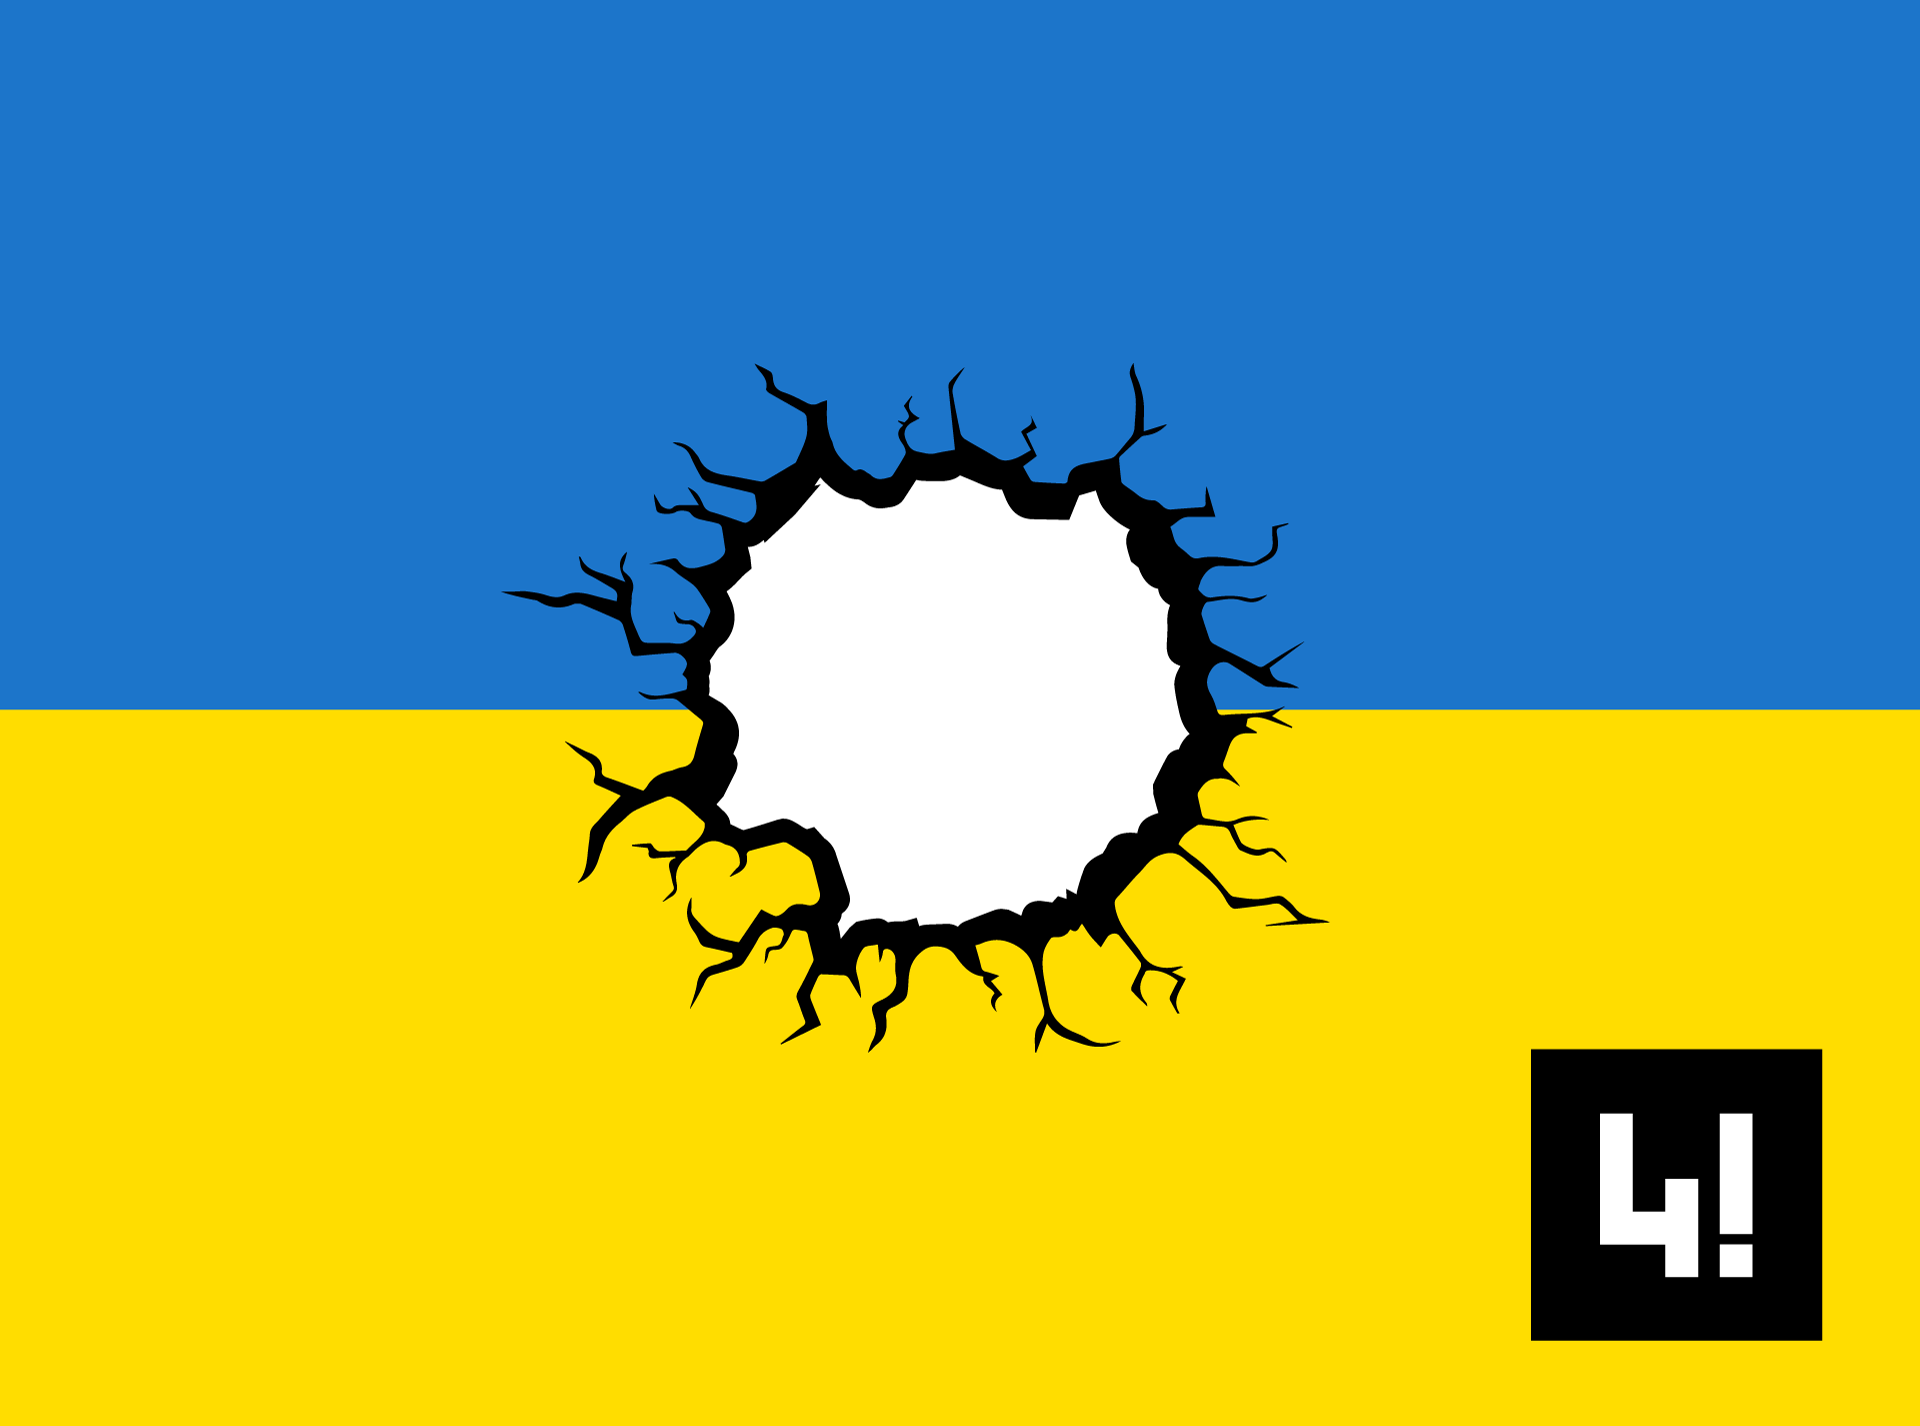 Háború Ukrajnában